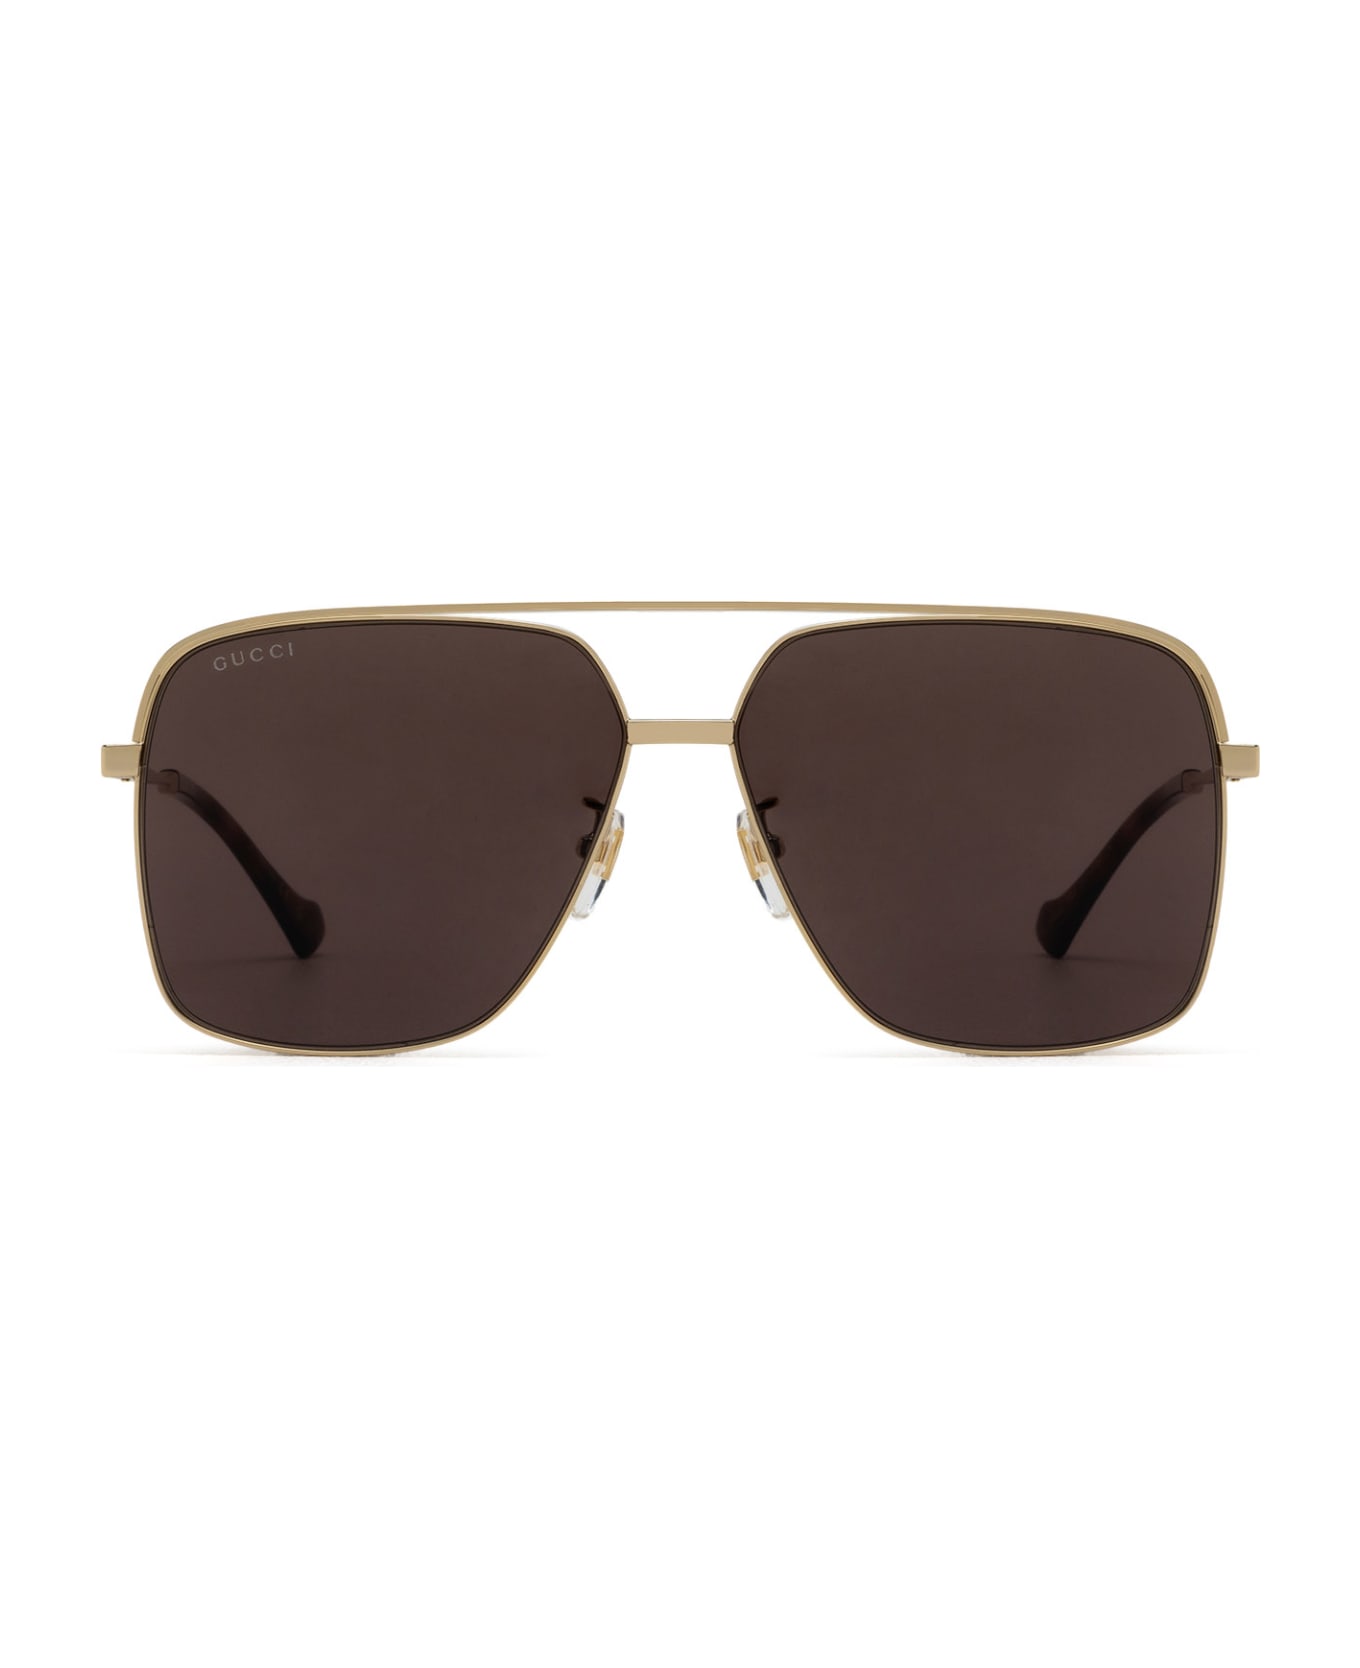 Gucci Eyewear Gg1099sa Gold Sunglasses - Gold